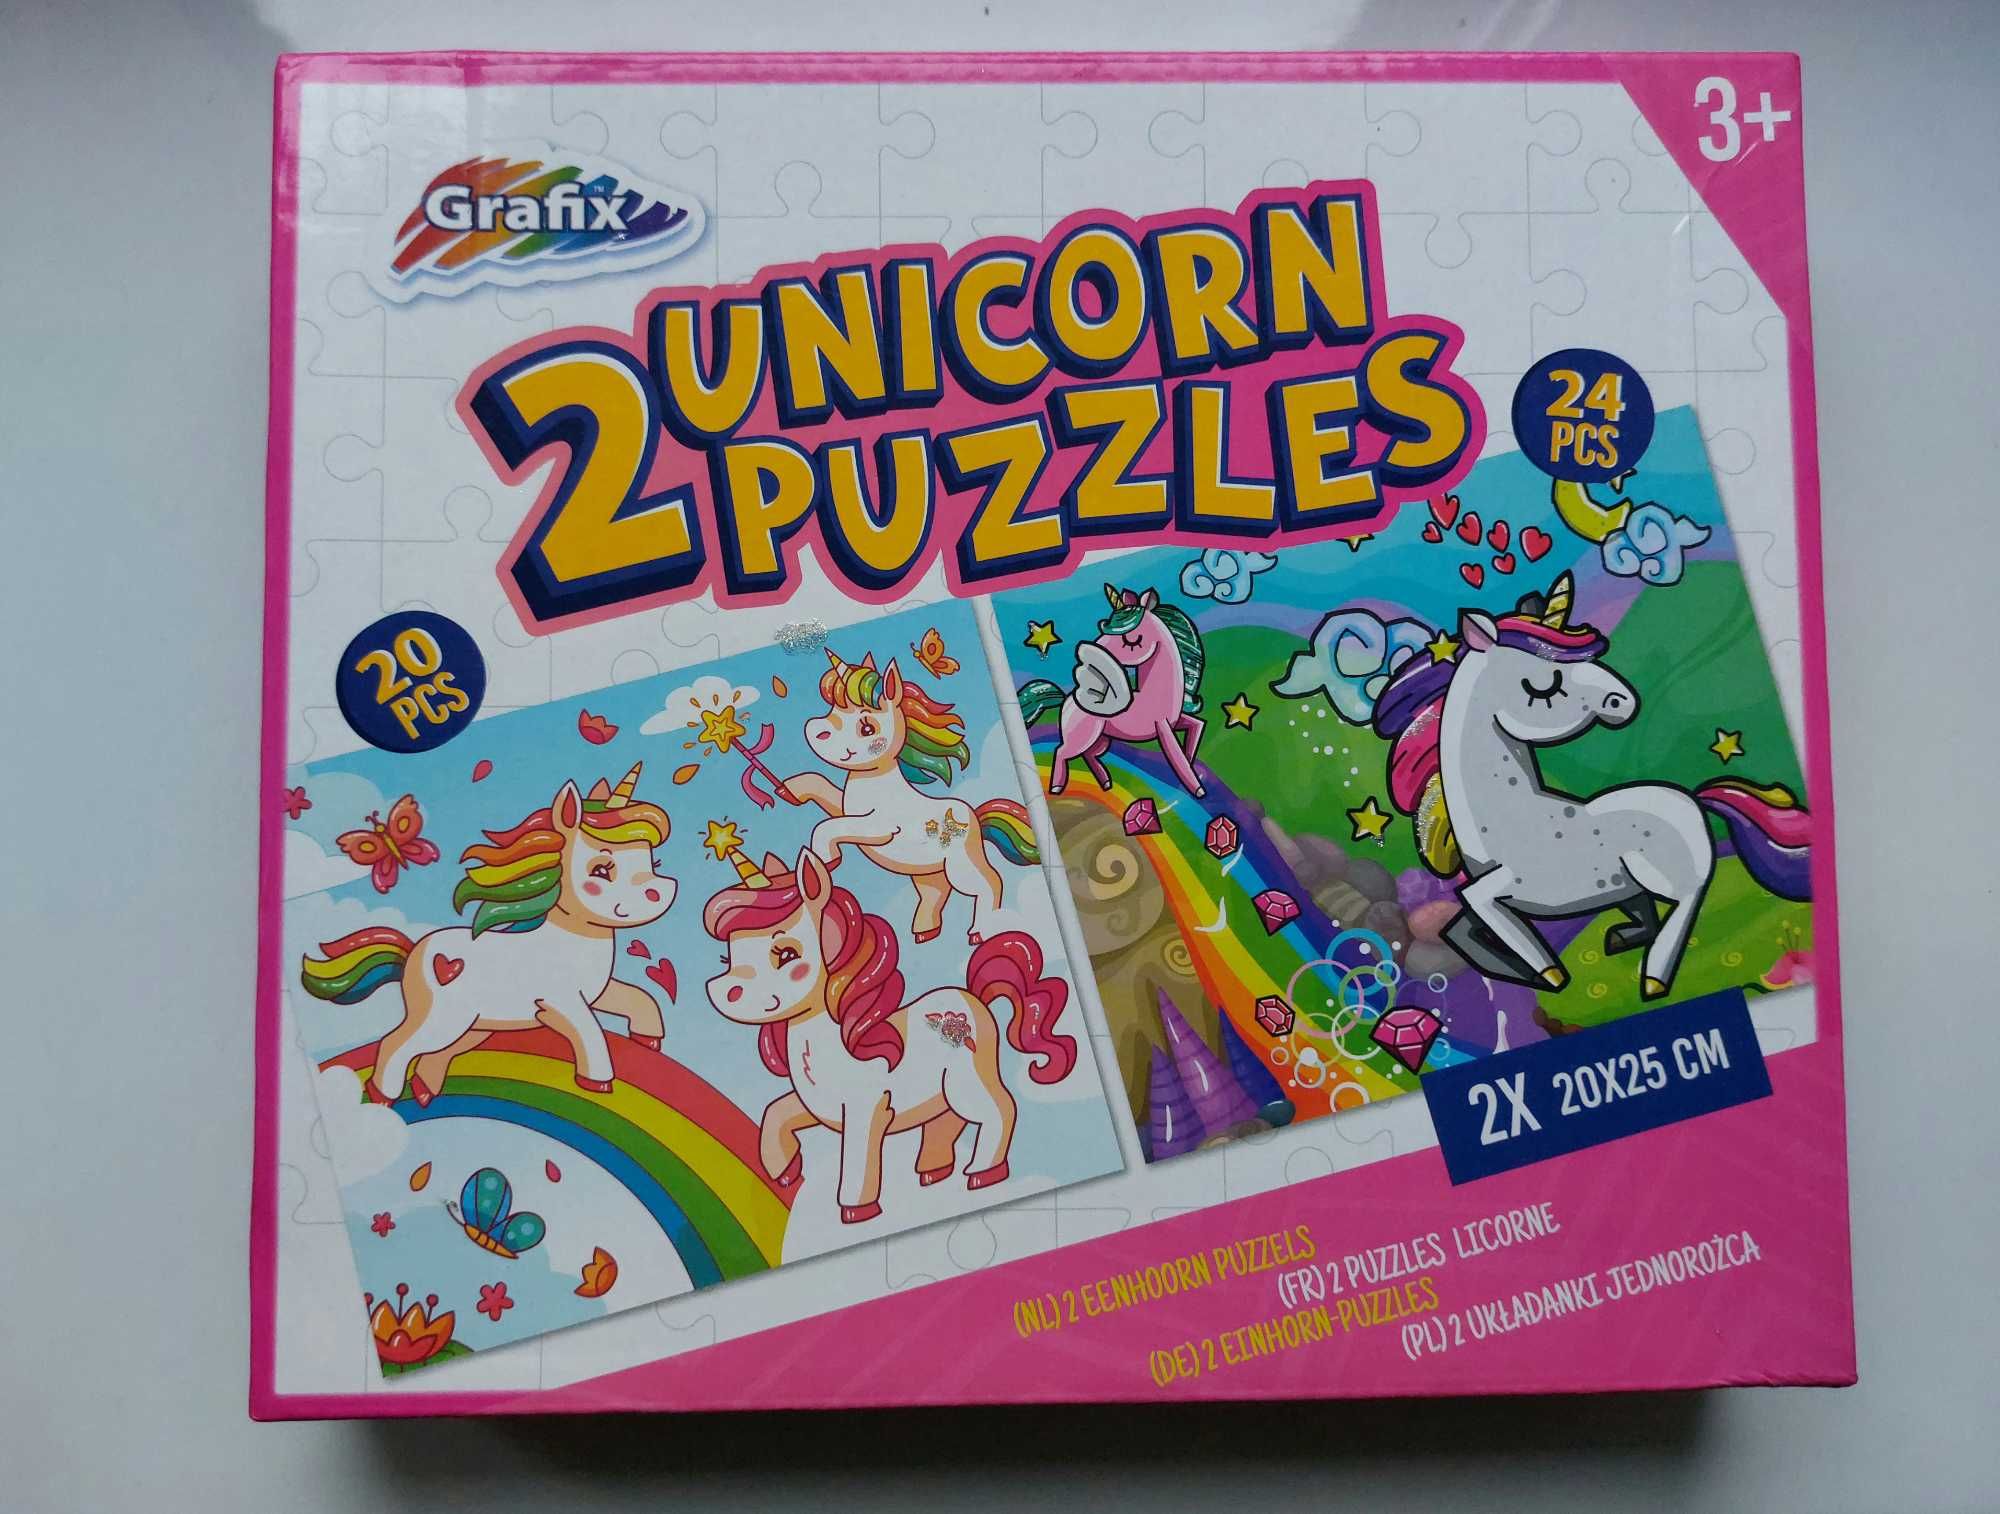 Puzzle puzle jednorozec unicorn 2szt brokat